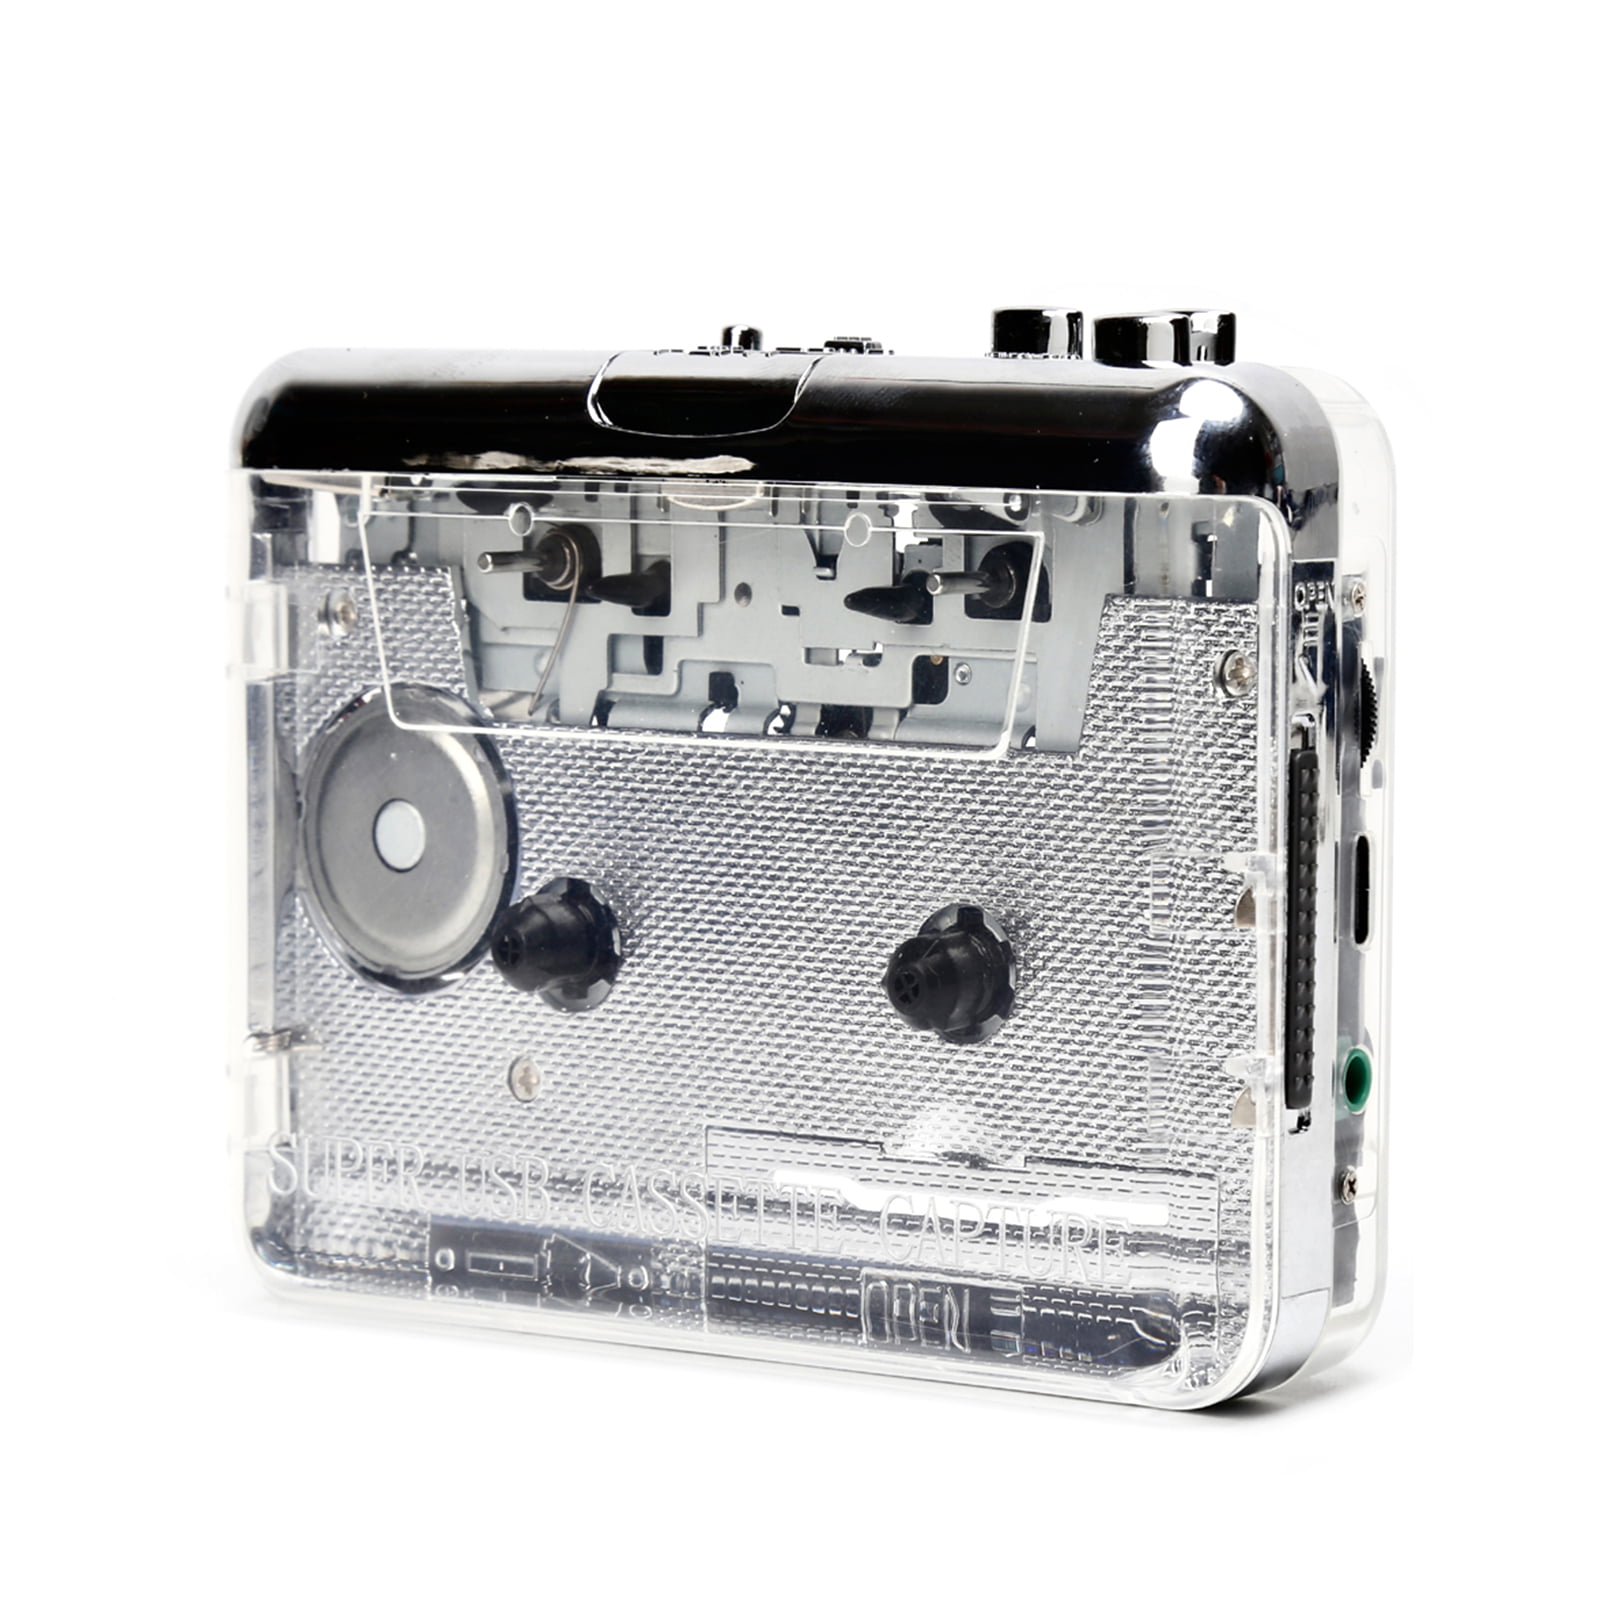 Walkman Portable Audio Cassette Players for sale in Hazle Township